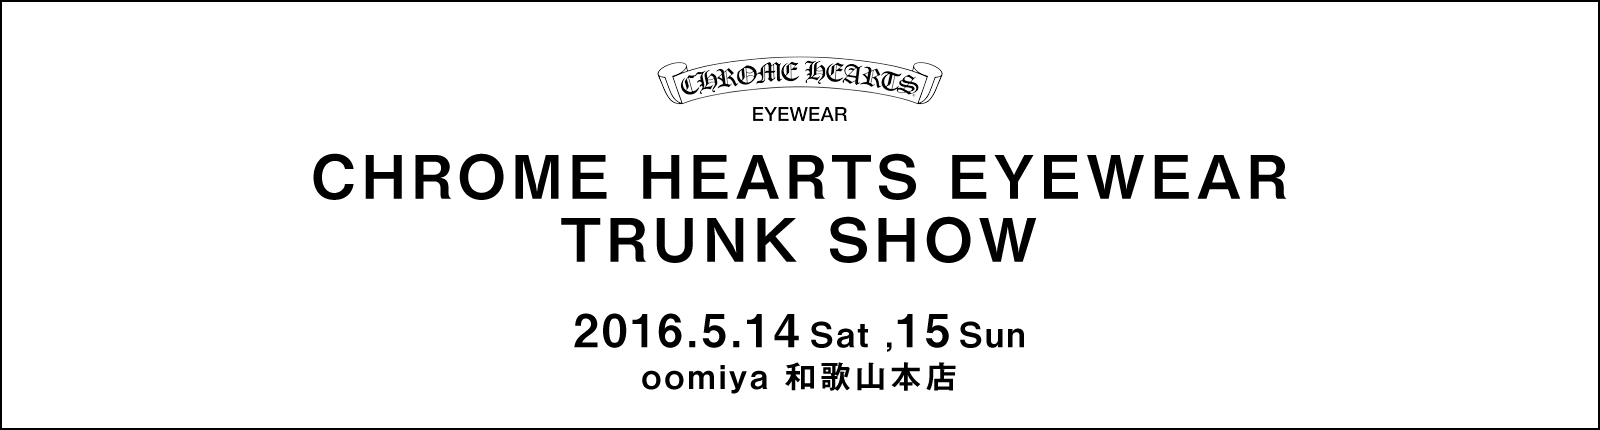 CHROME HEARTS EYEWEAR TRUNK SHOW［クロムハーツ アイウェア トランクショー］2016.5.14-15｜oomiya 和歌山本店